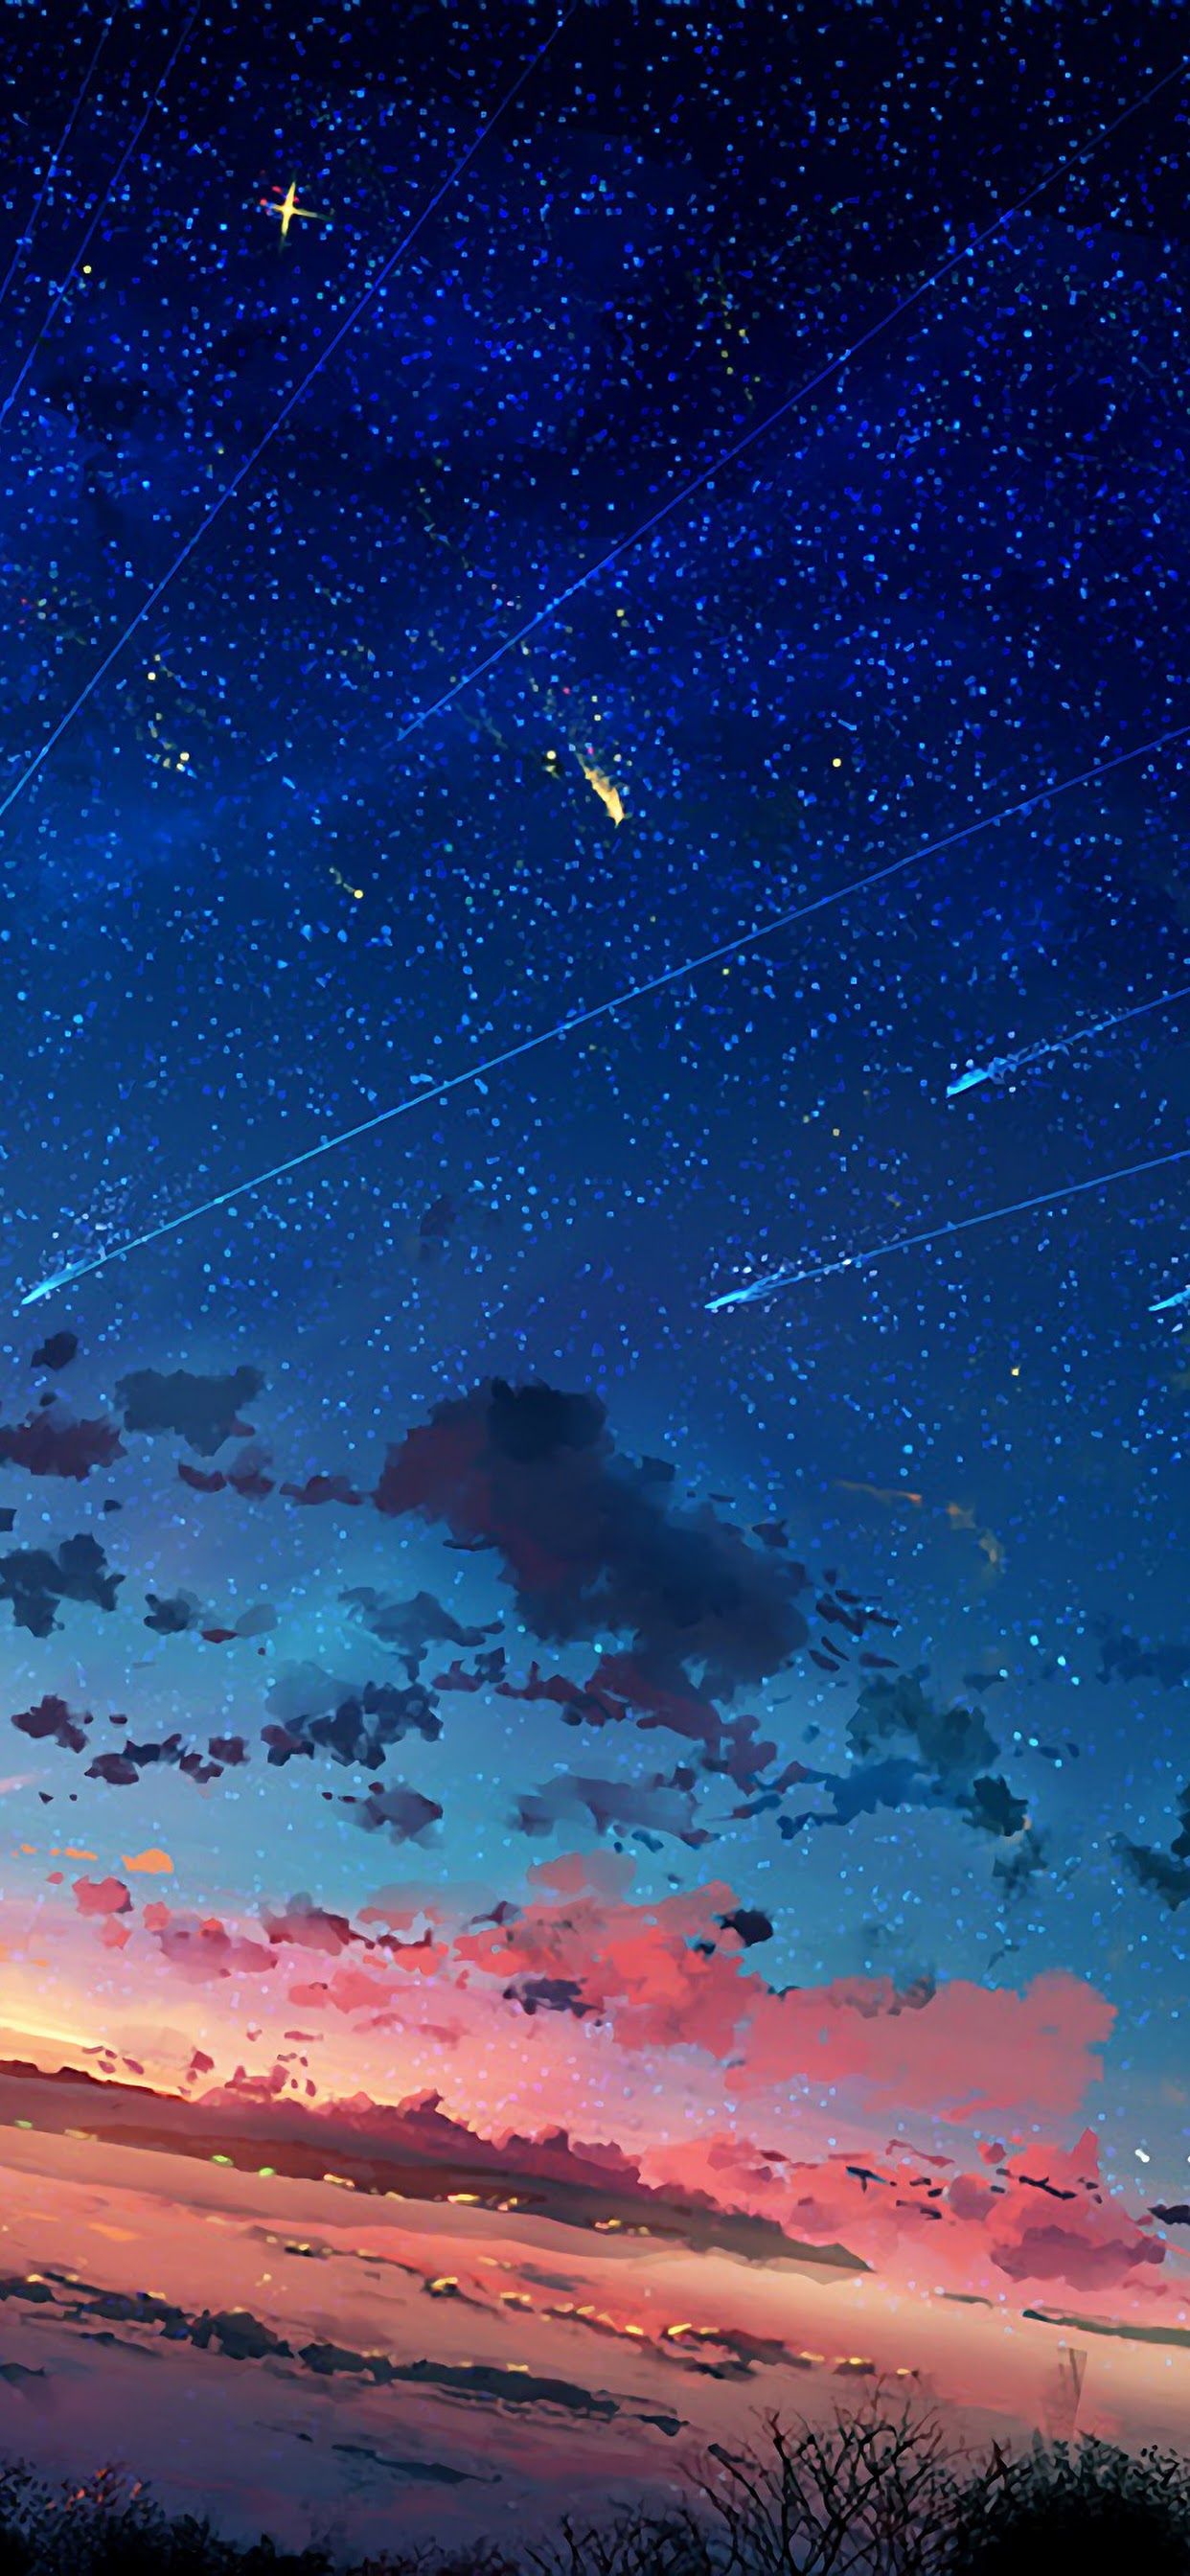 Anime Night Sky iPhone Wallpaper Free Anime Night Sky iPhone Background